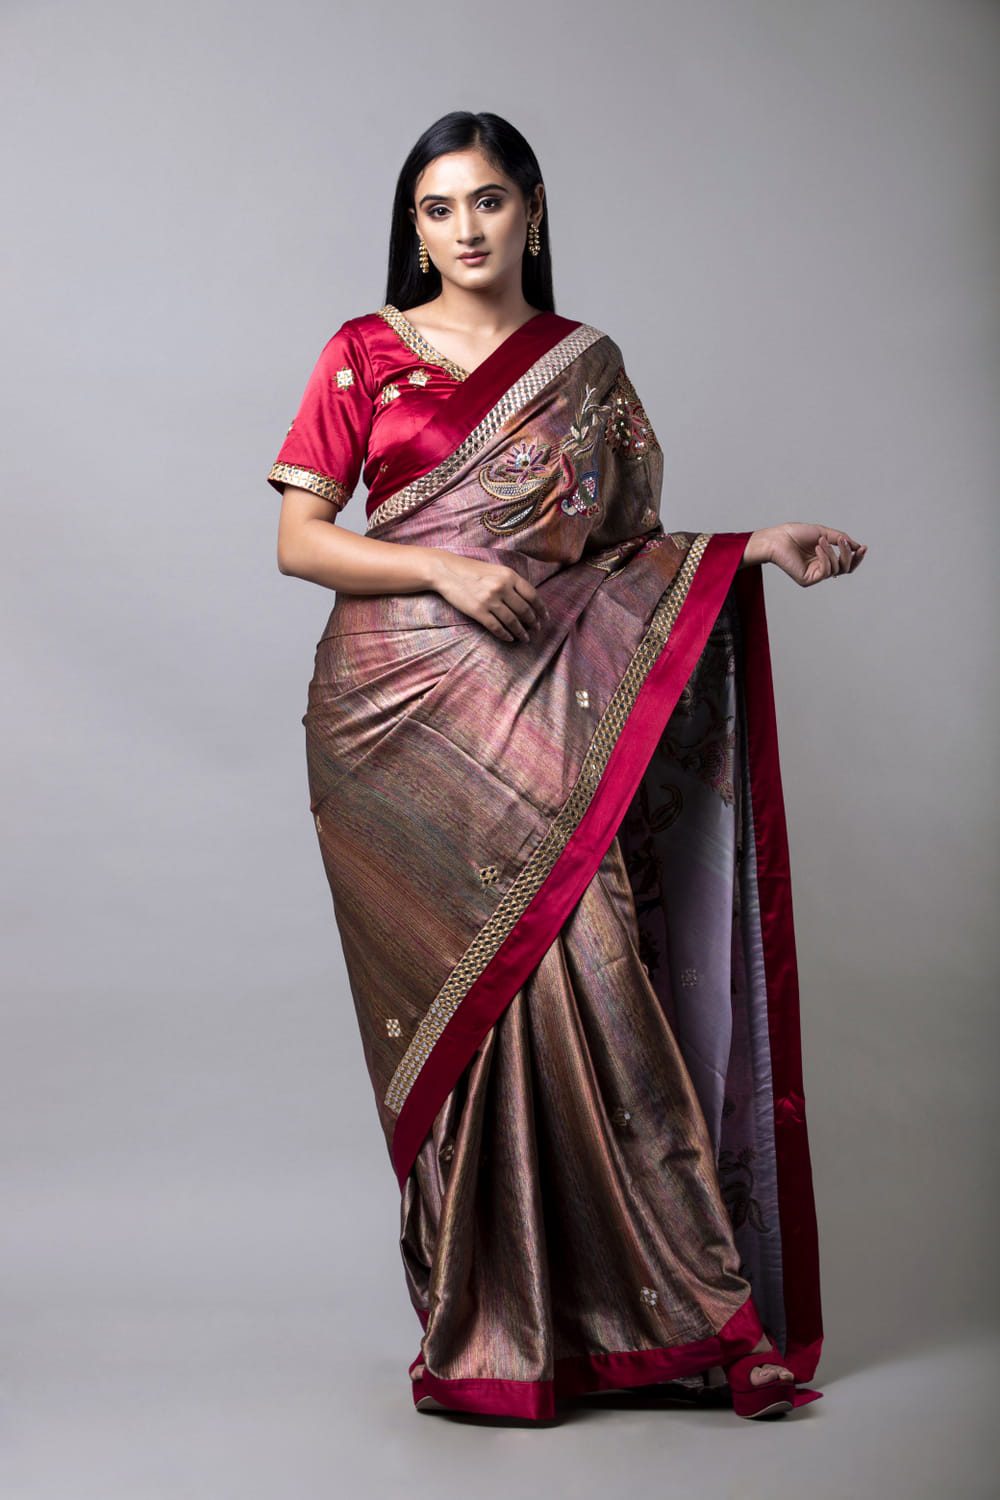 Rakhi Special Outfit Ideas | Indian dresigner Saree in Toronto - London - Dubai At Folklore